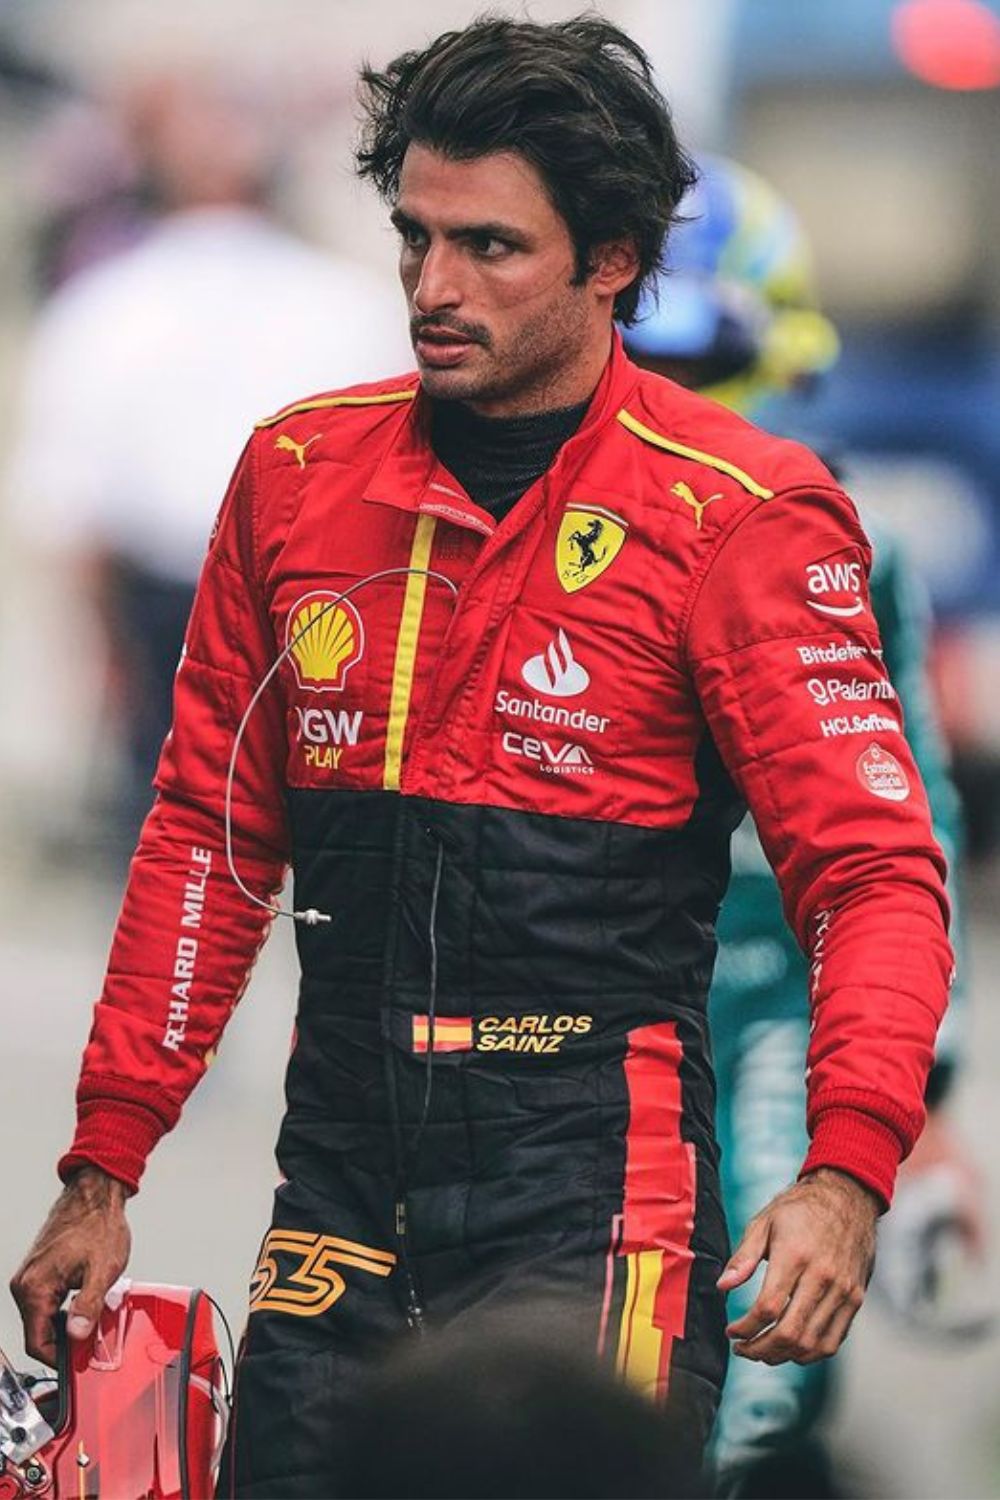 Racing Driver Carlos Sainz